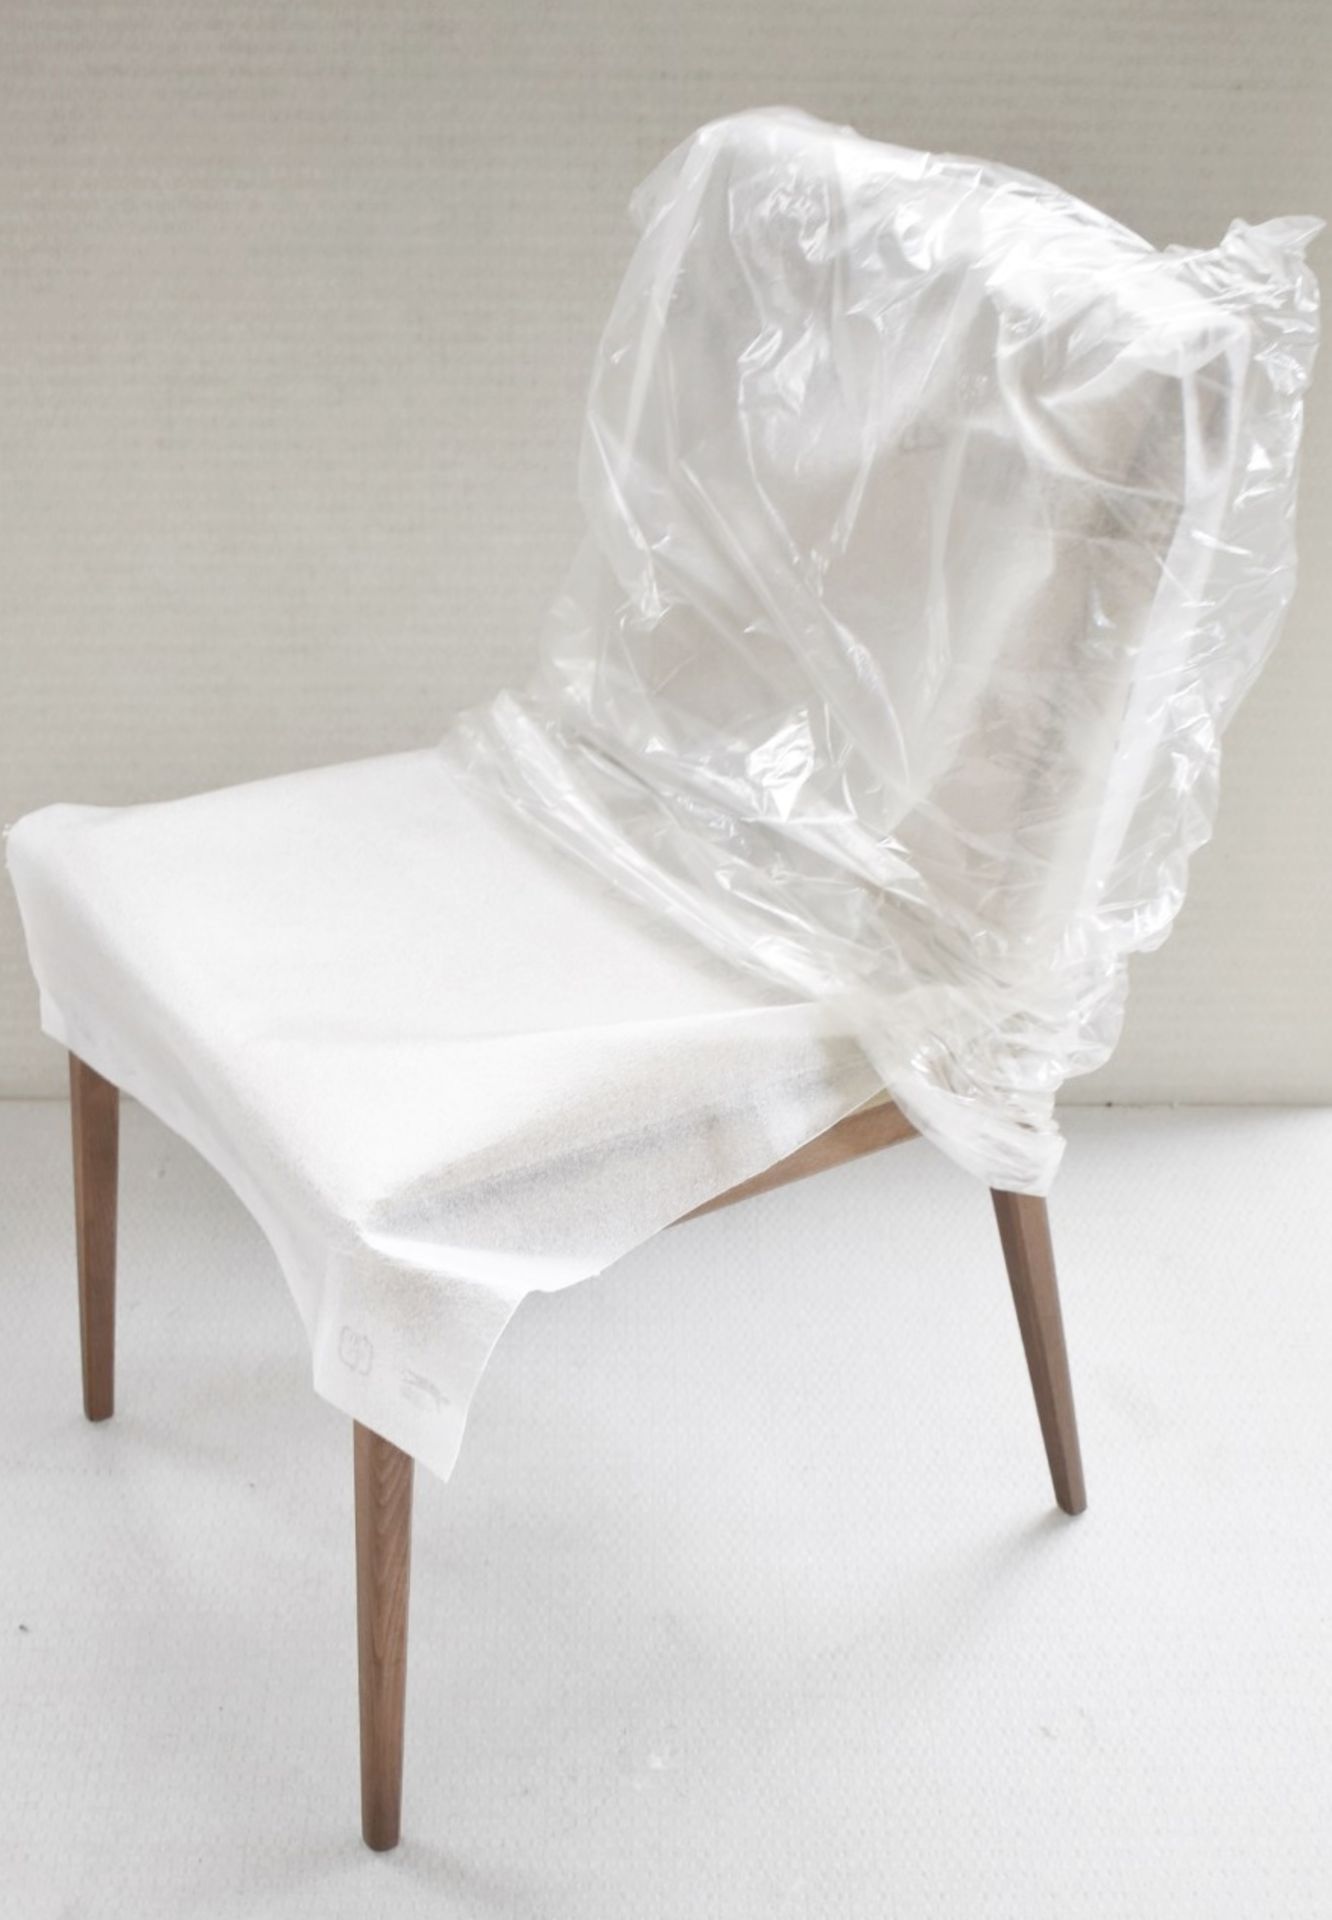 1 x CATTELAN ITALIA 'Sofia' Leather Upholsted Designer Chair - Original RRP £520.00 - Ref: 4934658/ - Image 8 of 9